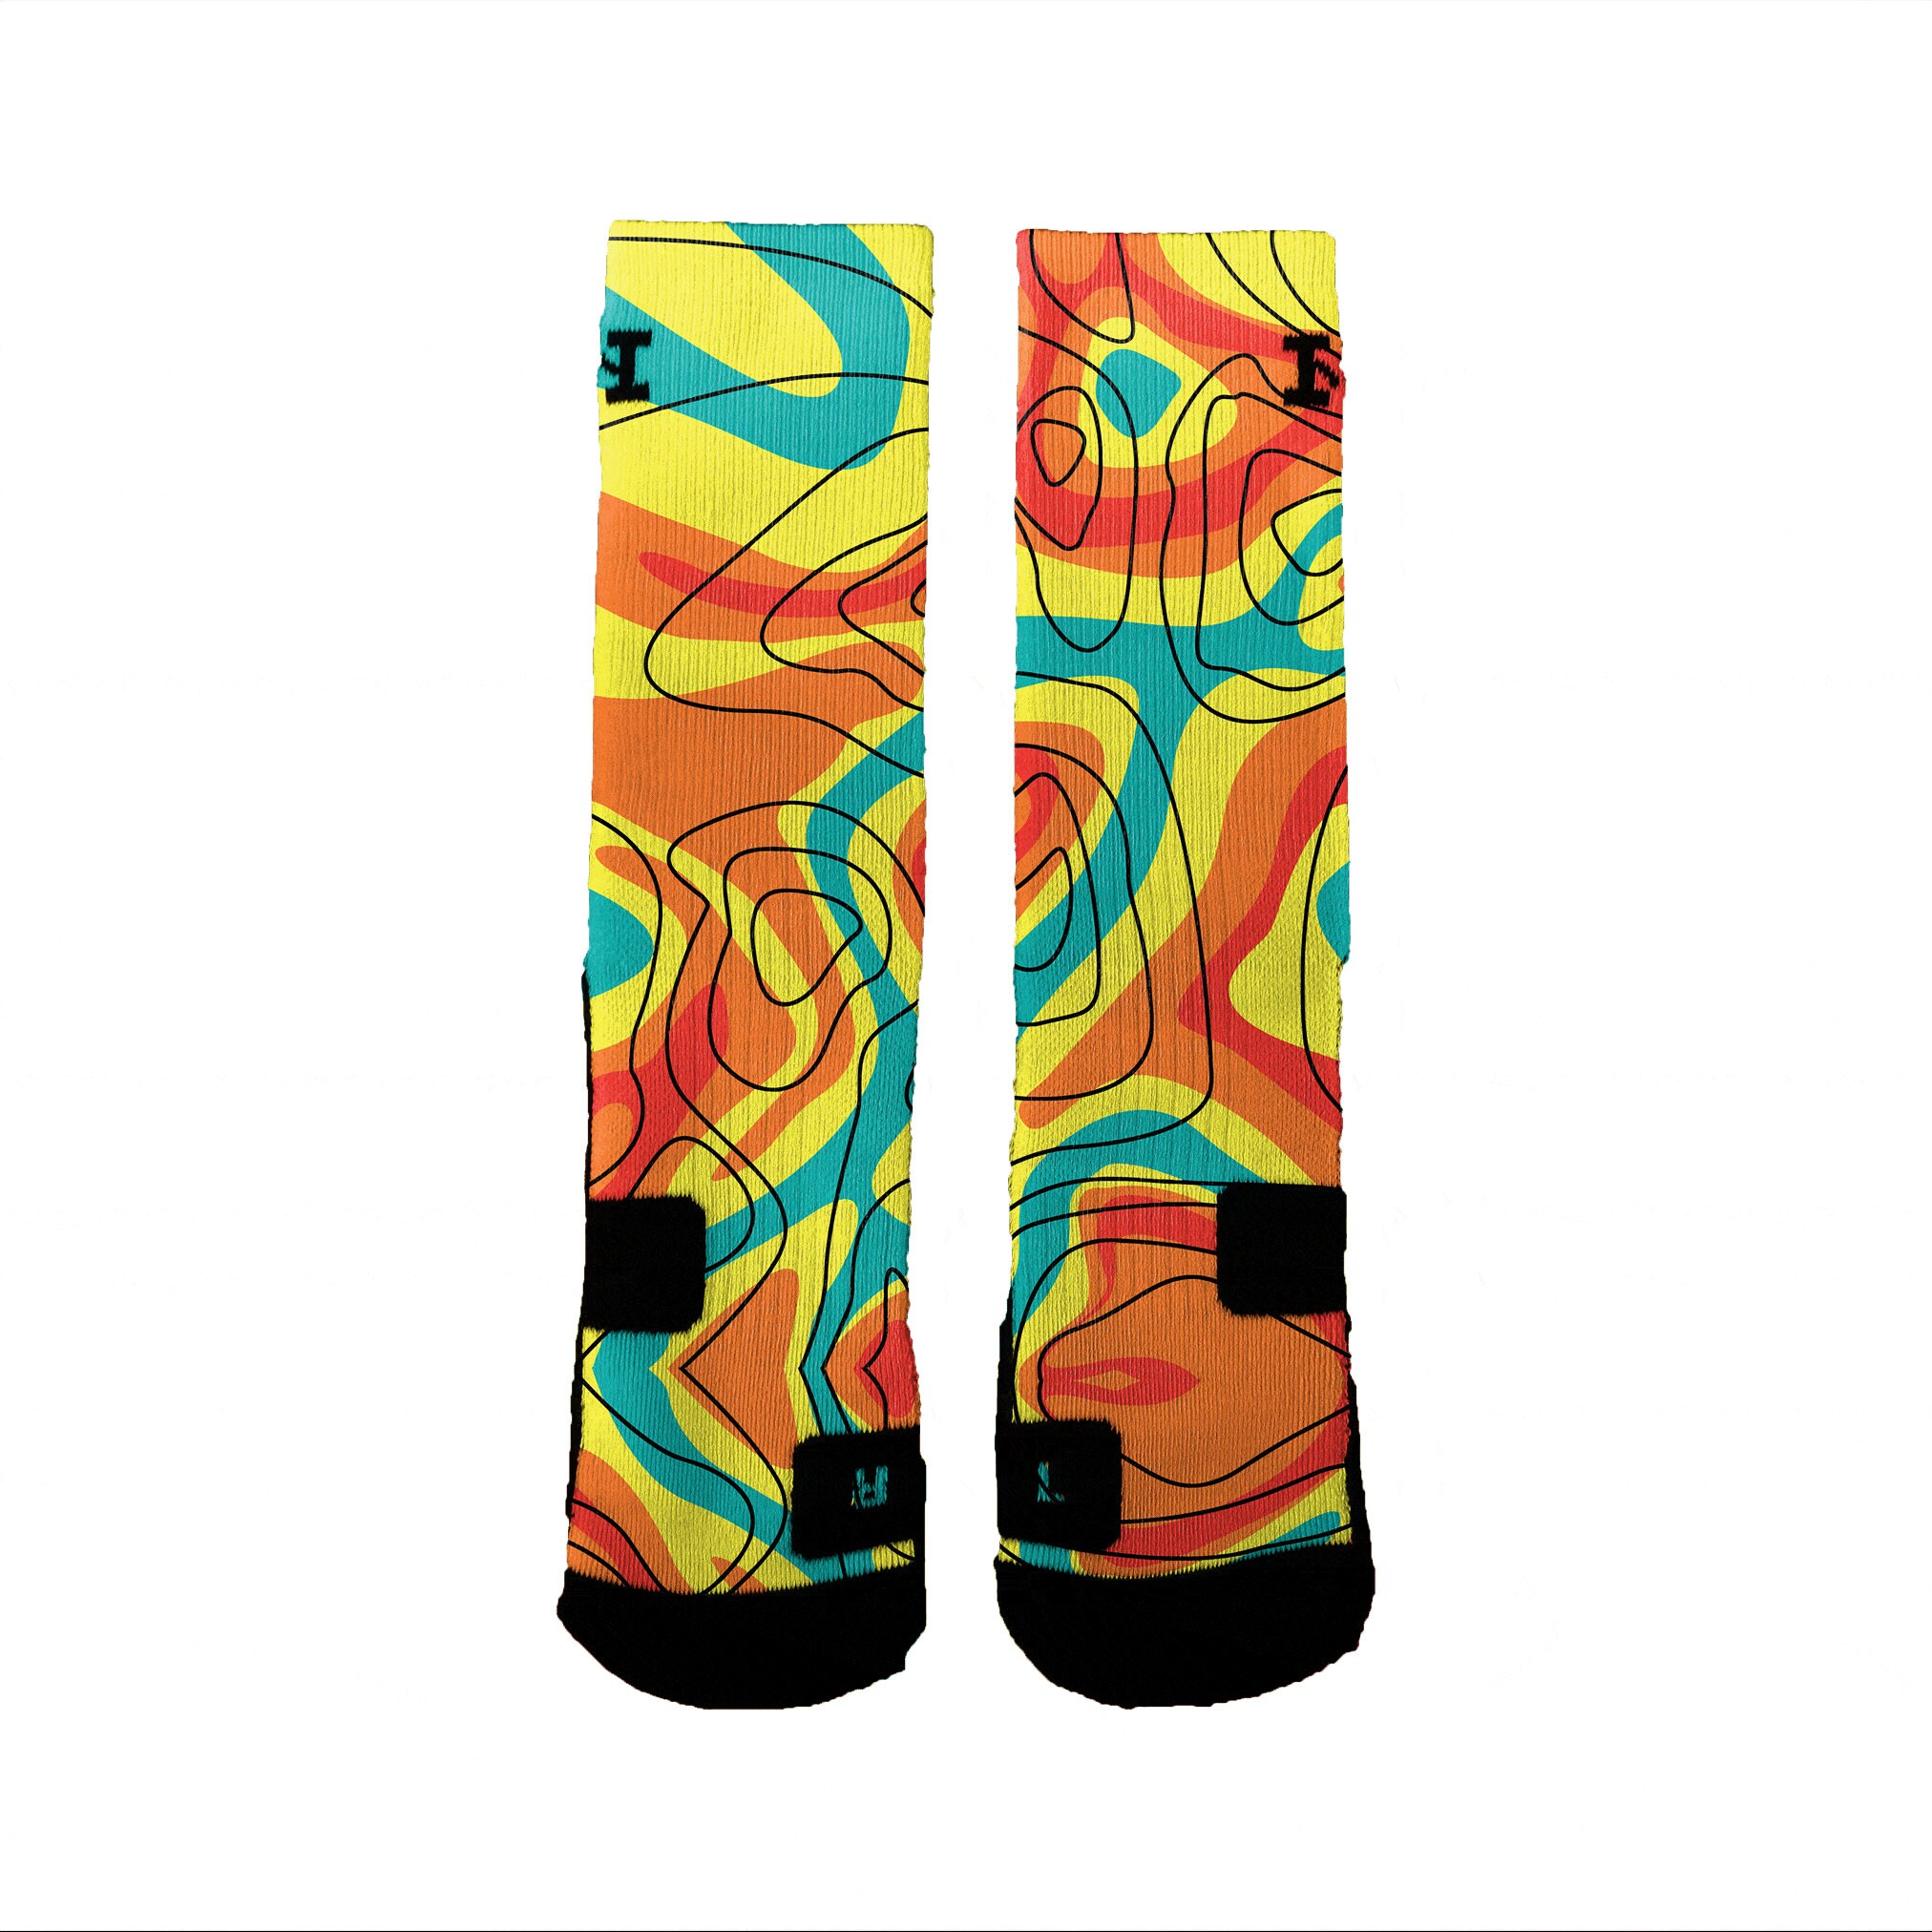 Weatherman Hoopswagg Customized Socks All Shoe Sizes Perfect - Etsy